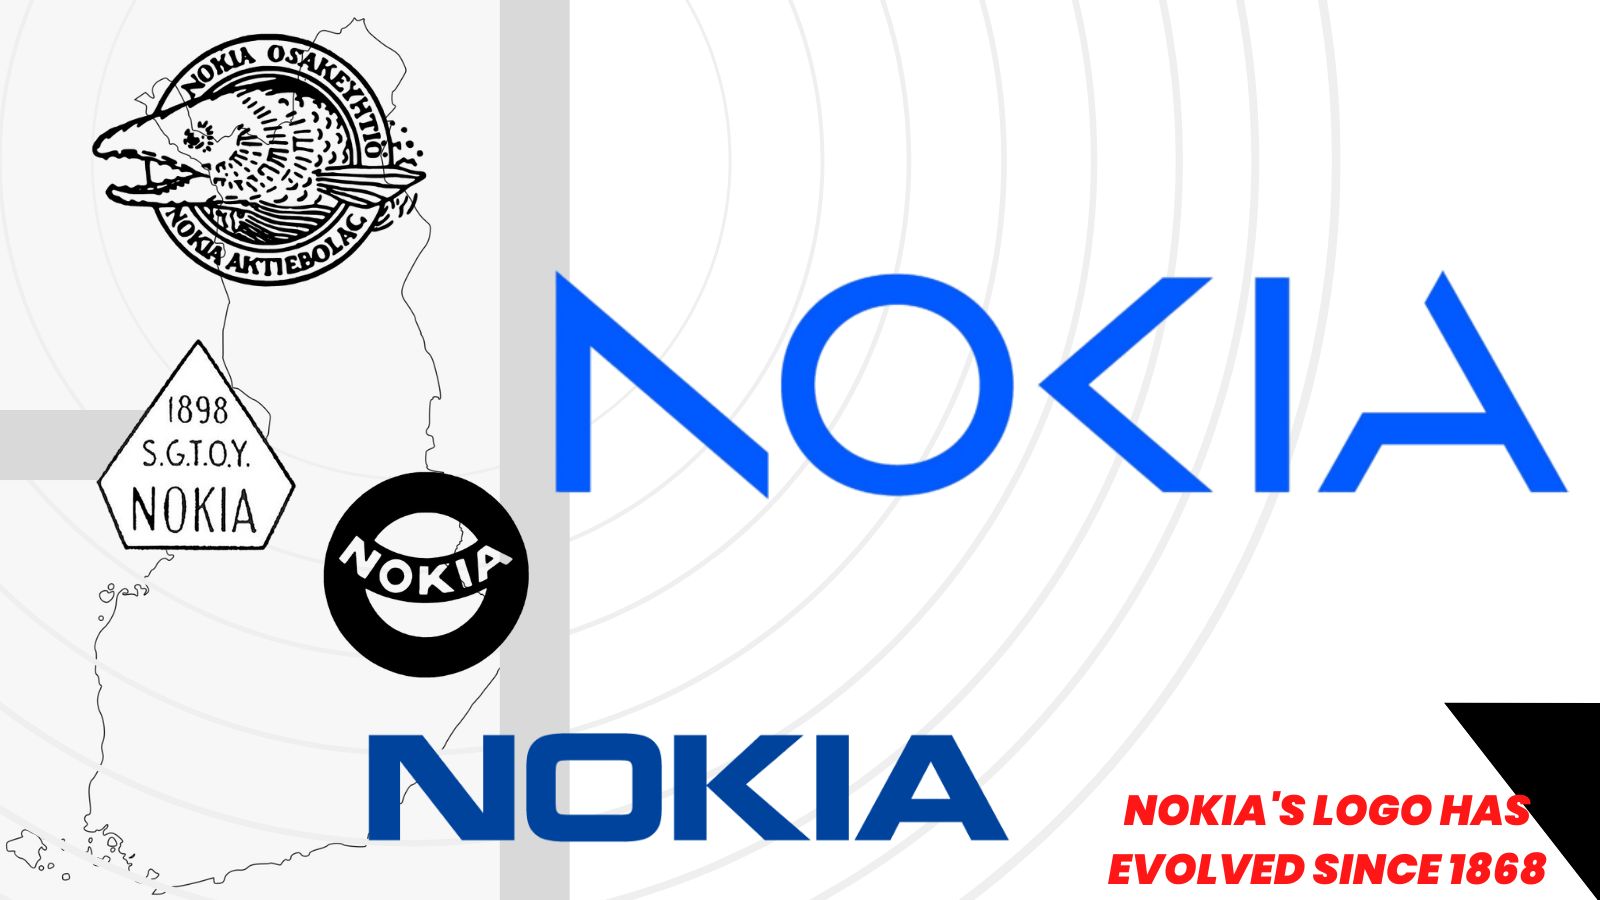 Nokia logo has evolved since 1868